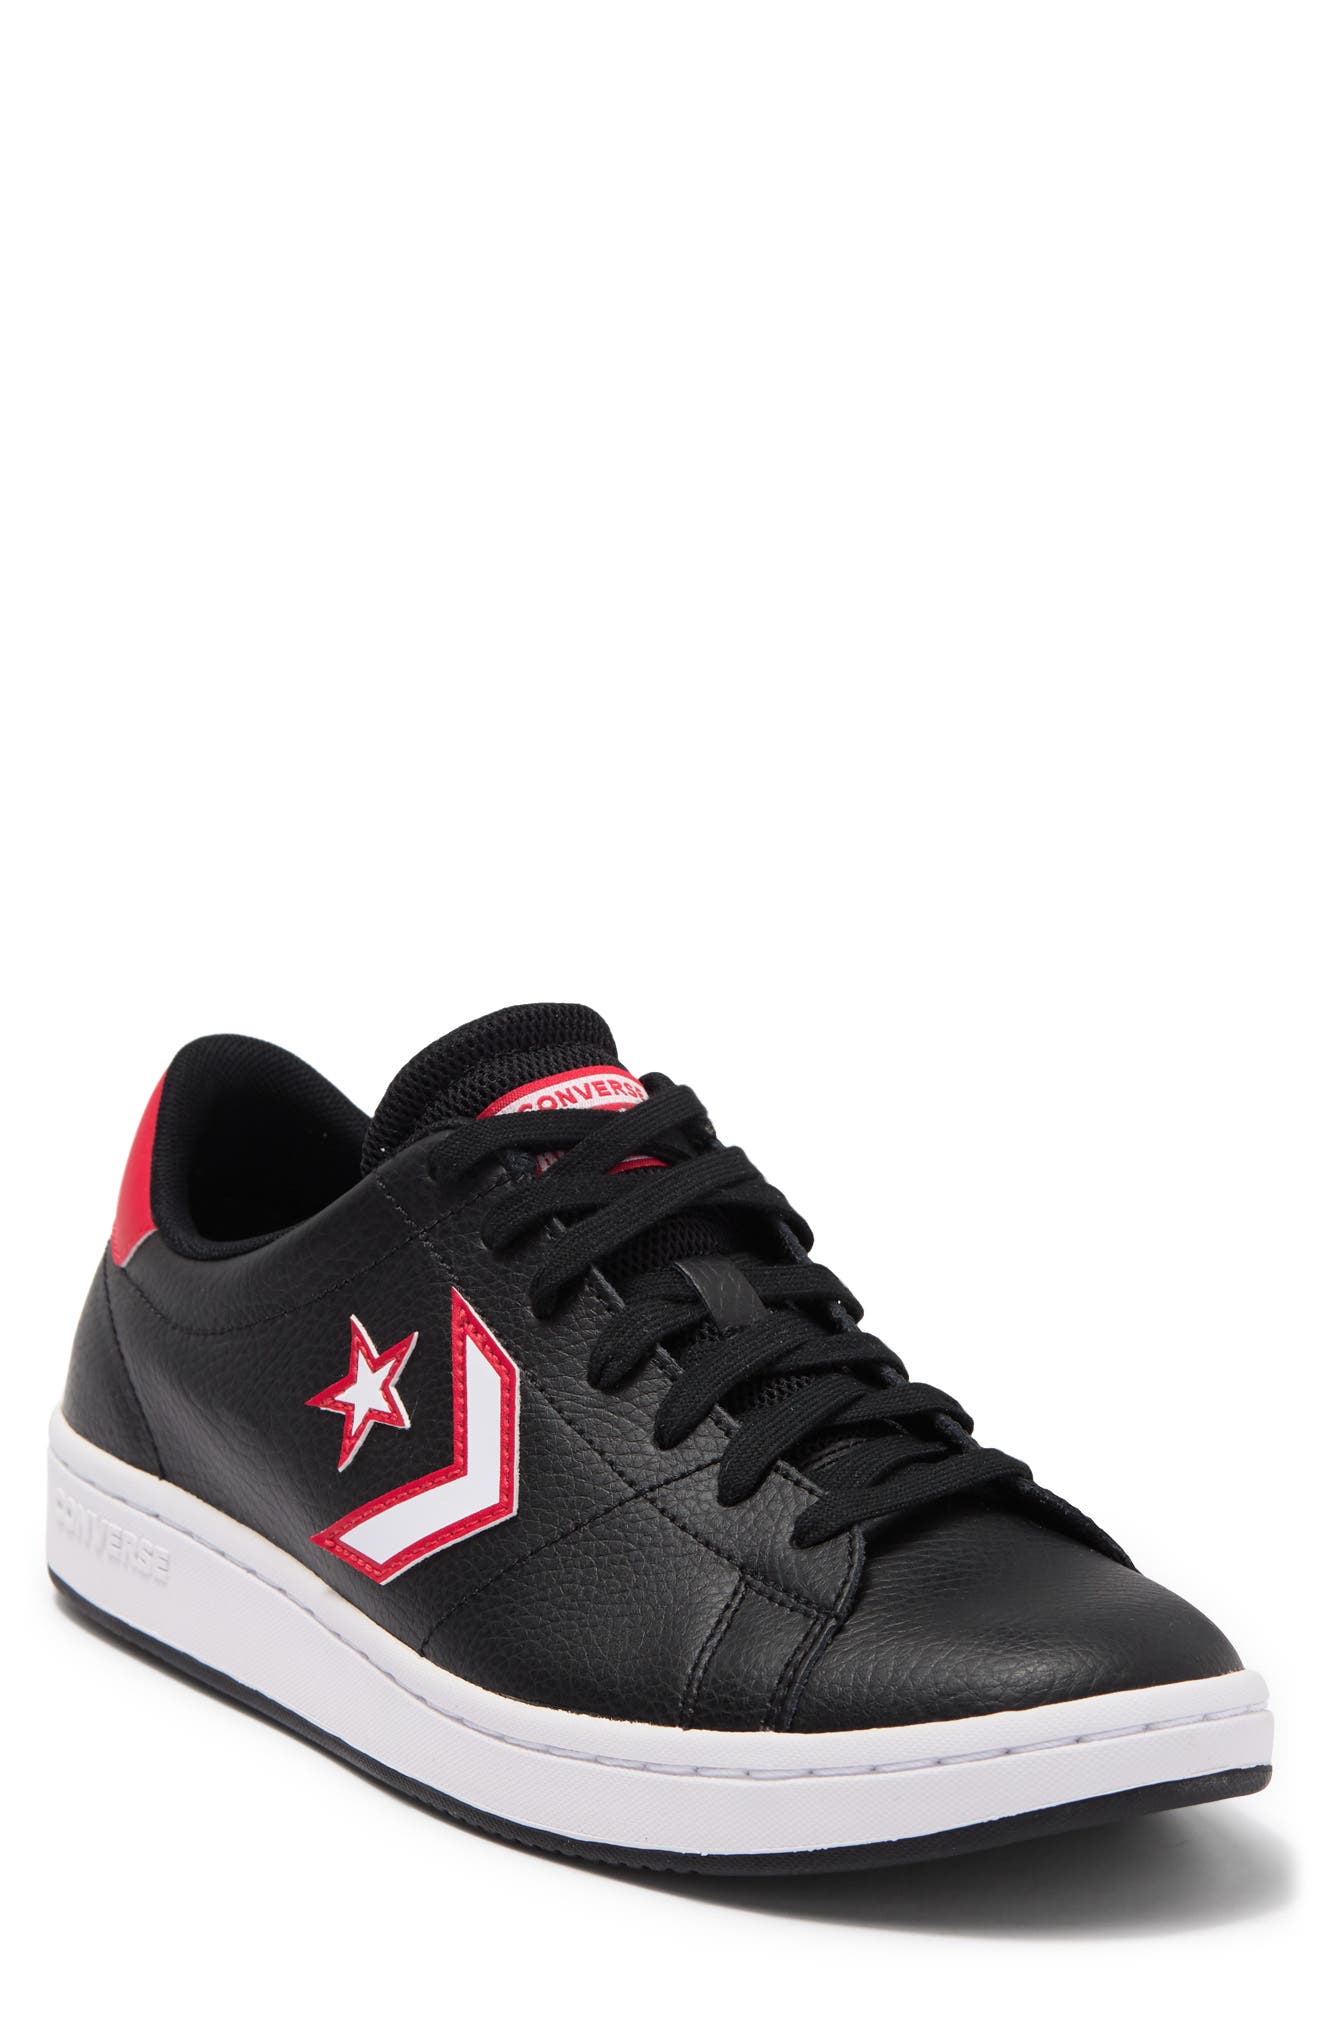 All-court Ox Leather Sneaker In Black/casino/white البلبل